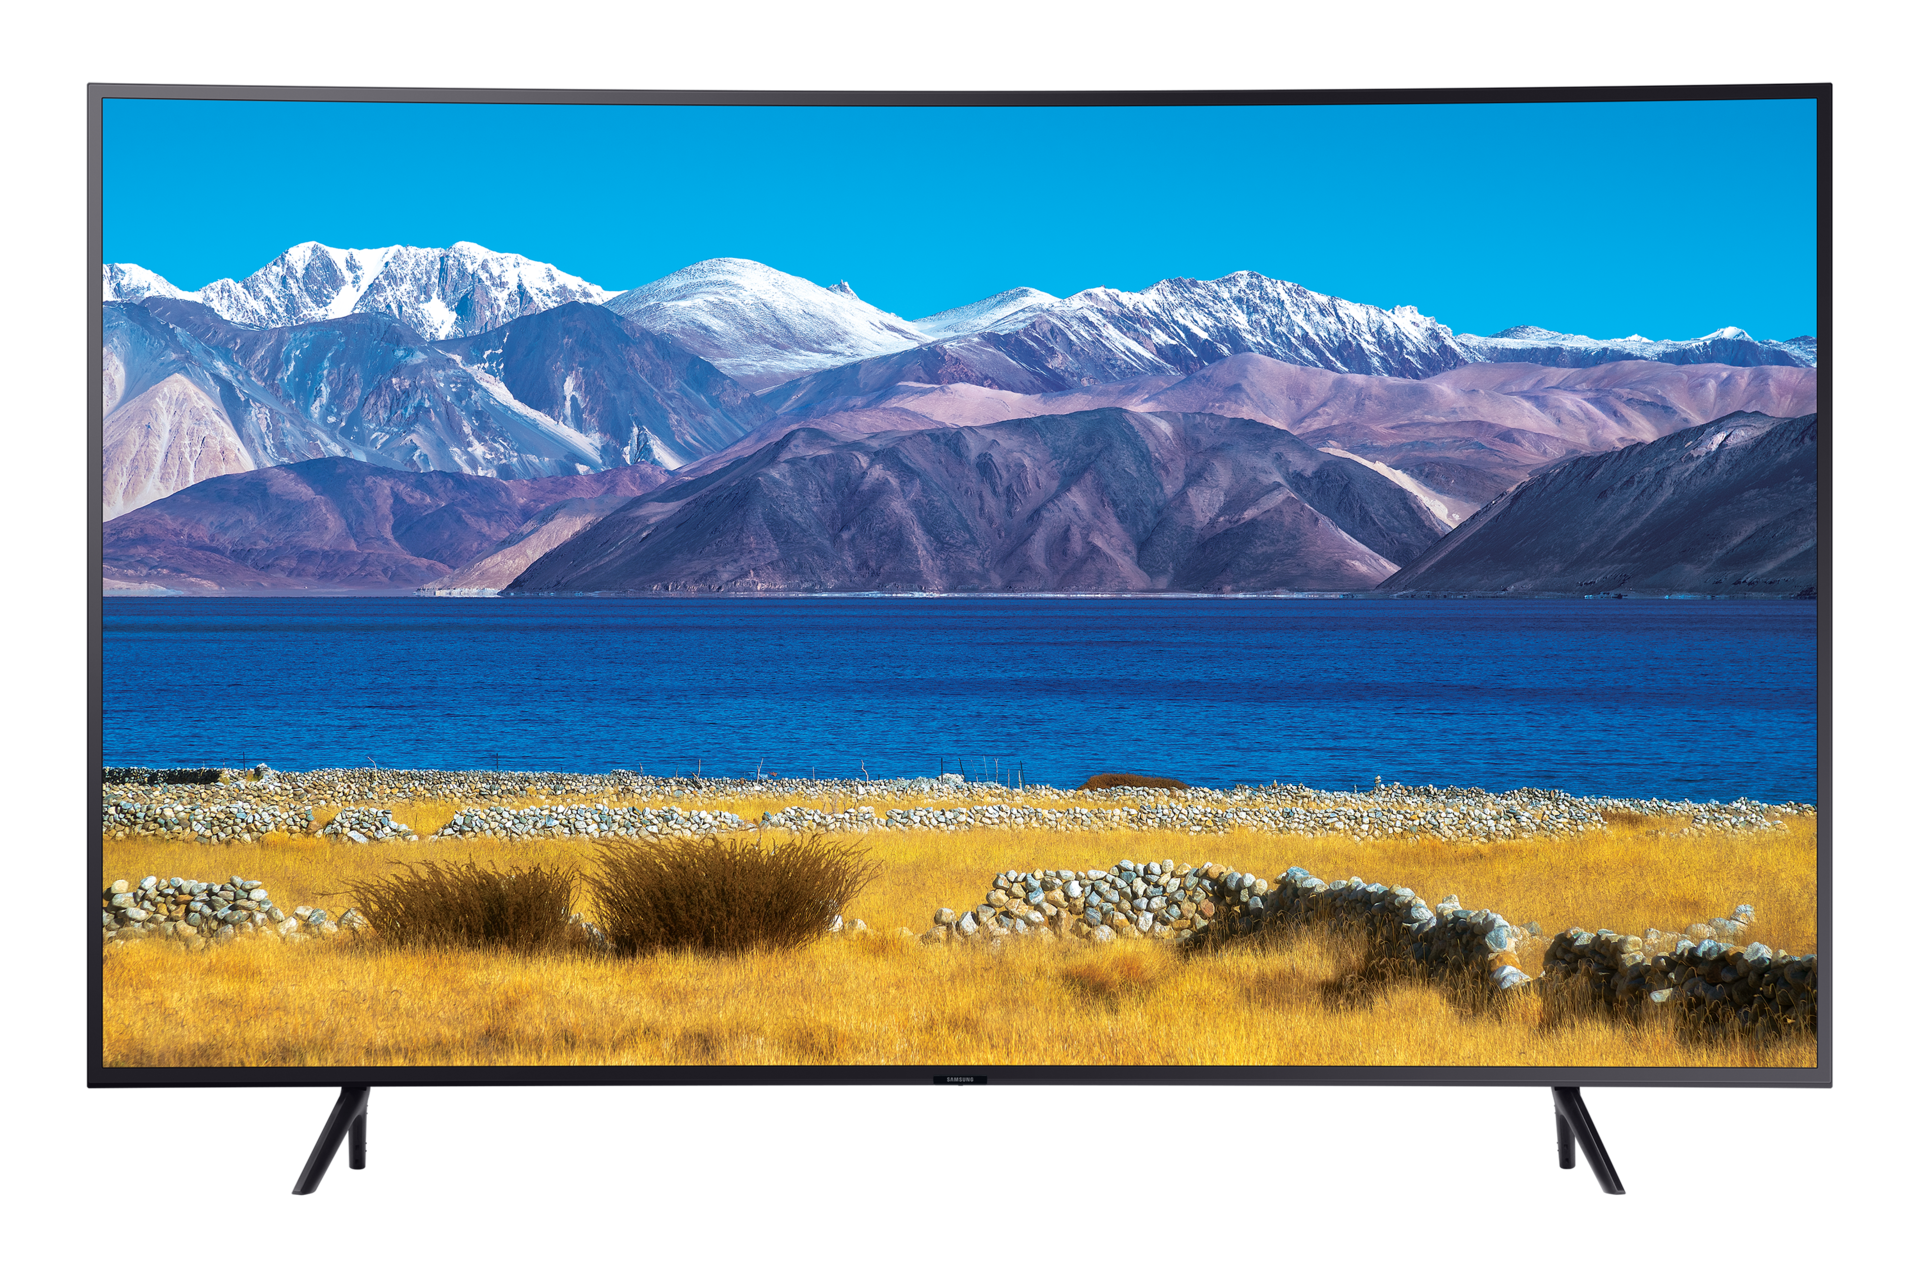 SAMSUNG 55-Inch Class Crystal UHD TU8300 Series - 4K UHD Curved Smart TV  With Alexa Built-in (UN55TU8300FXZA)